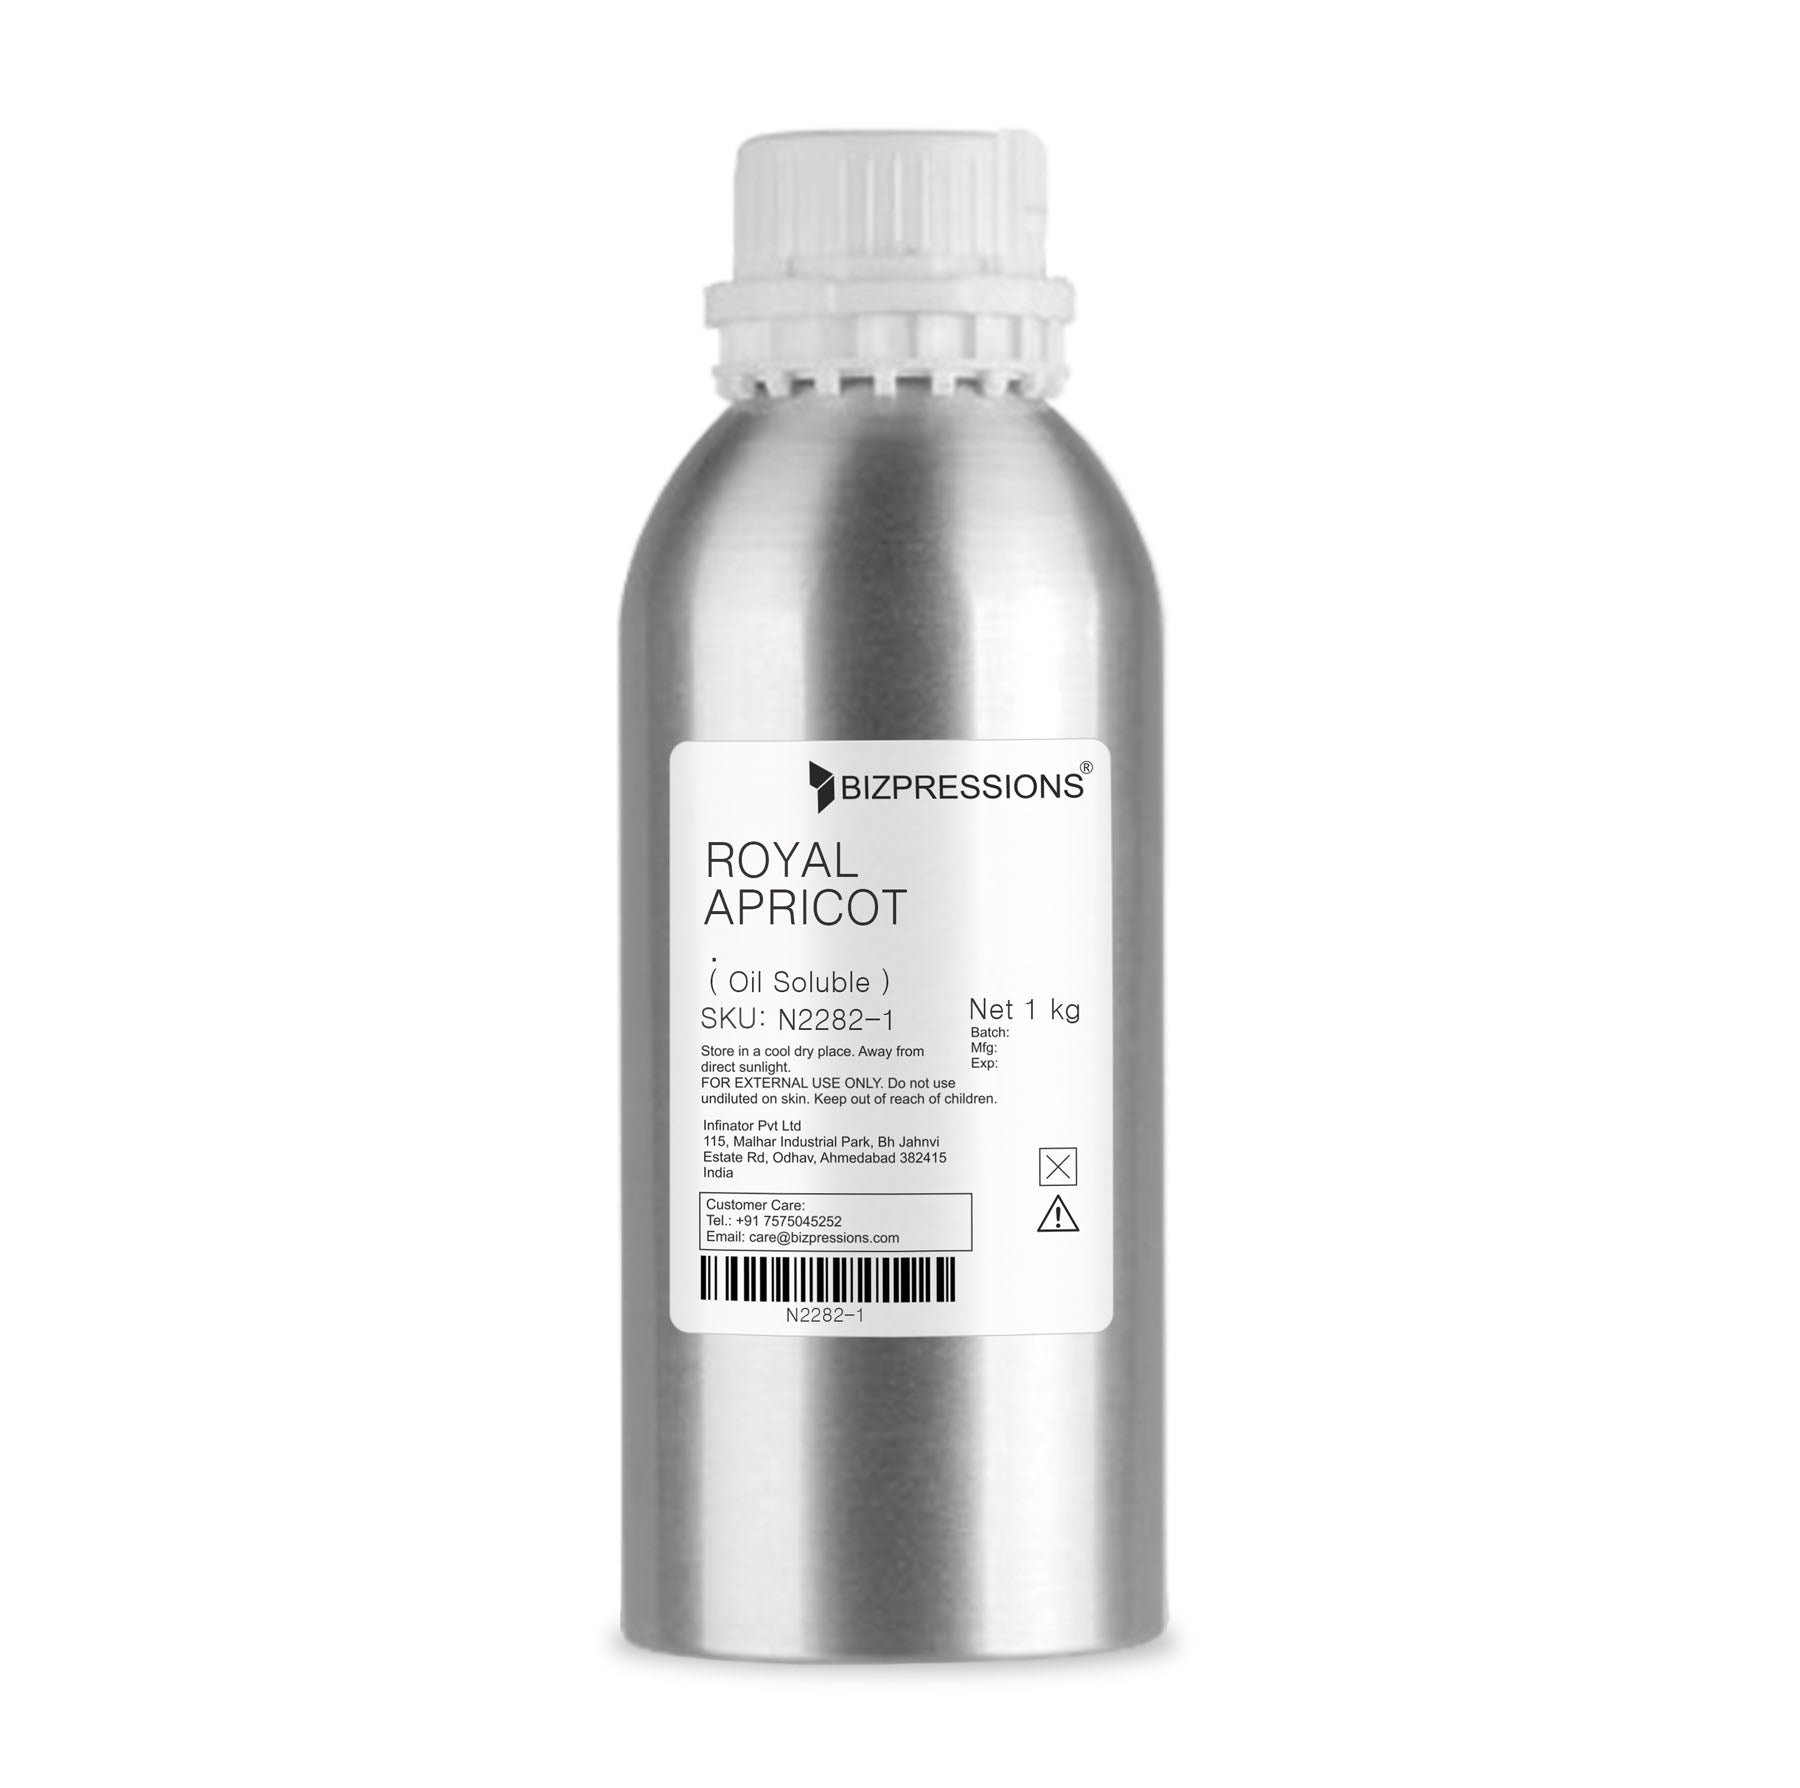 ROYAL APRICOT - Fragrance ( Oil Soluble ) - 1 kg